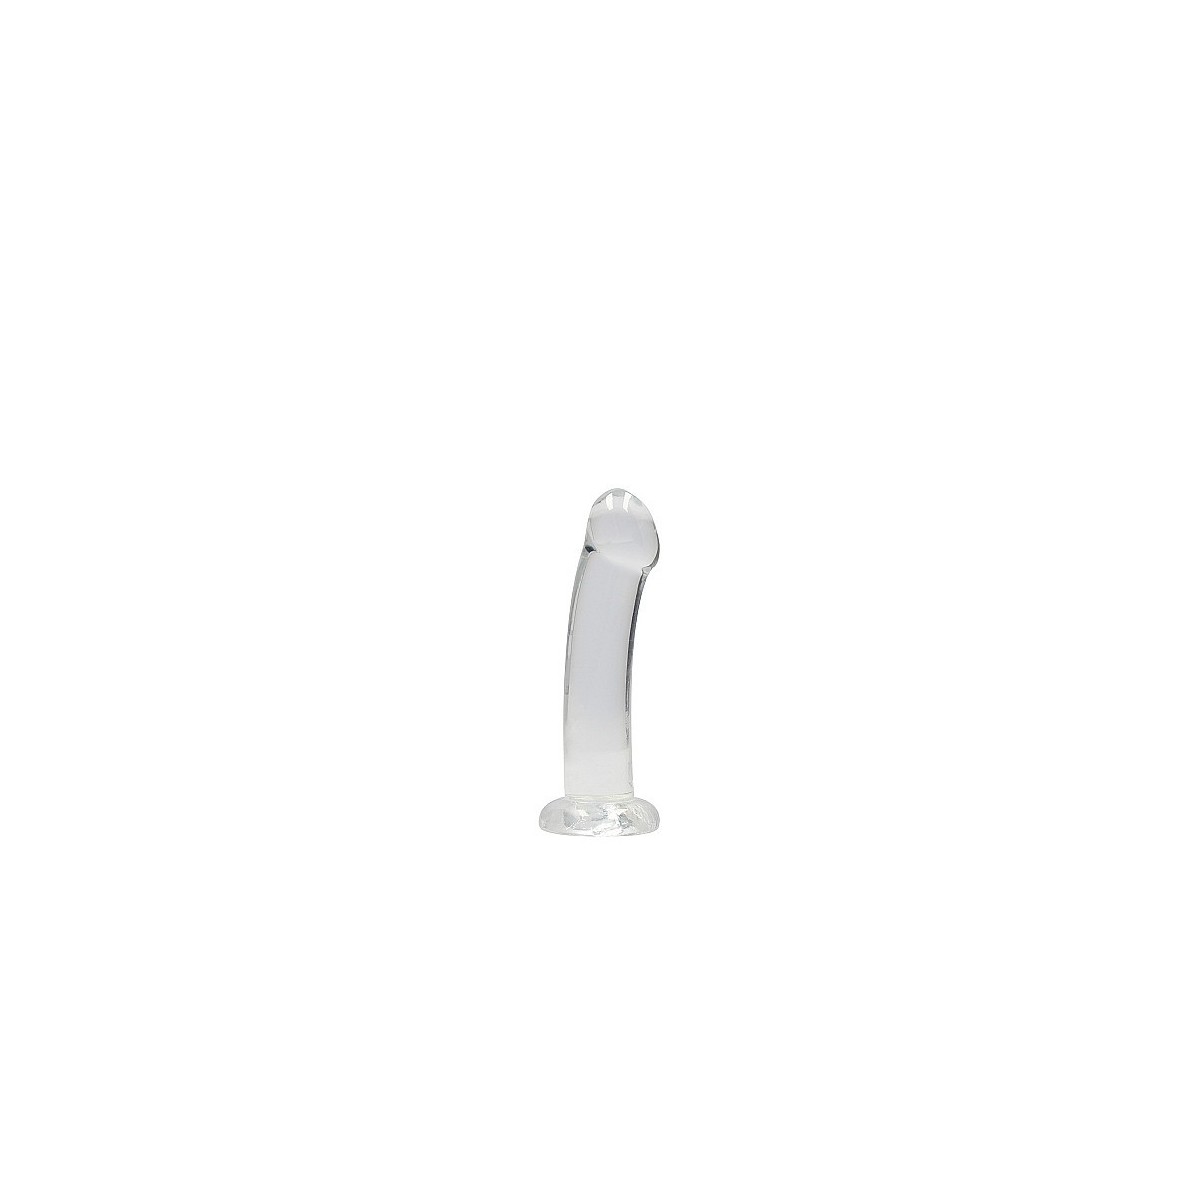 Dildo con ventosa Non Realistic Dildo Suction Cup - Transparent 17 cm